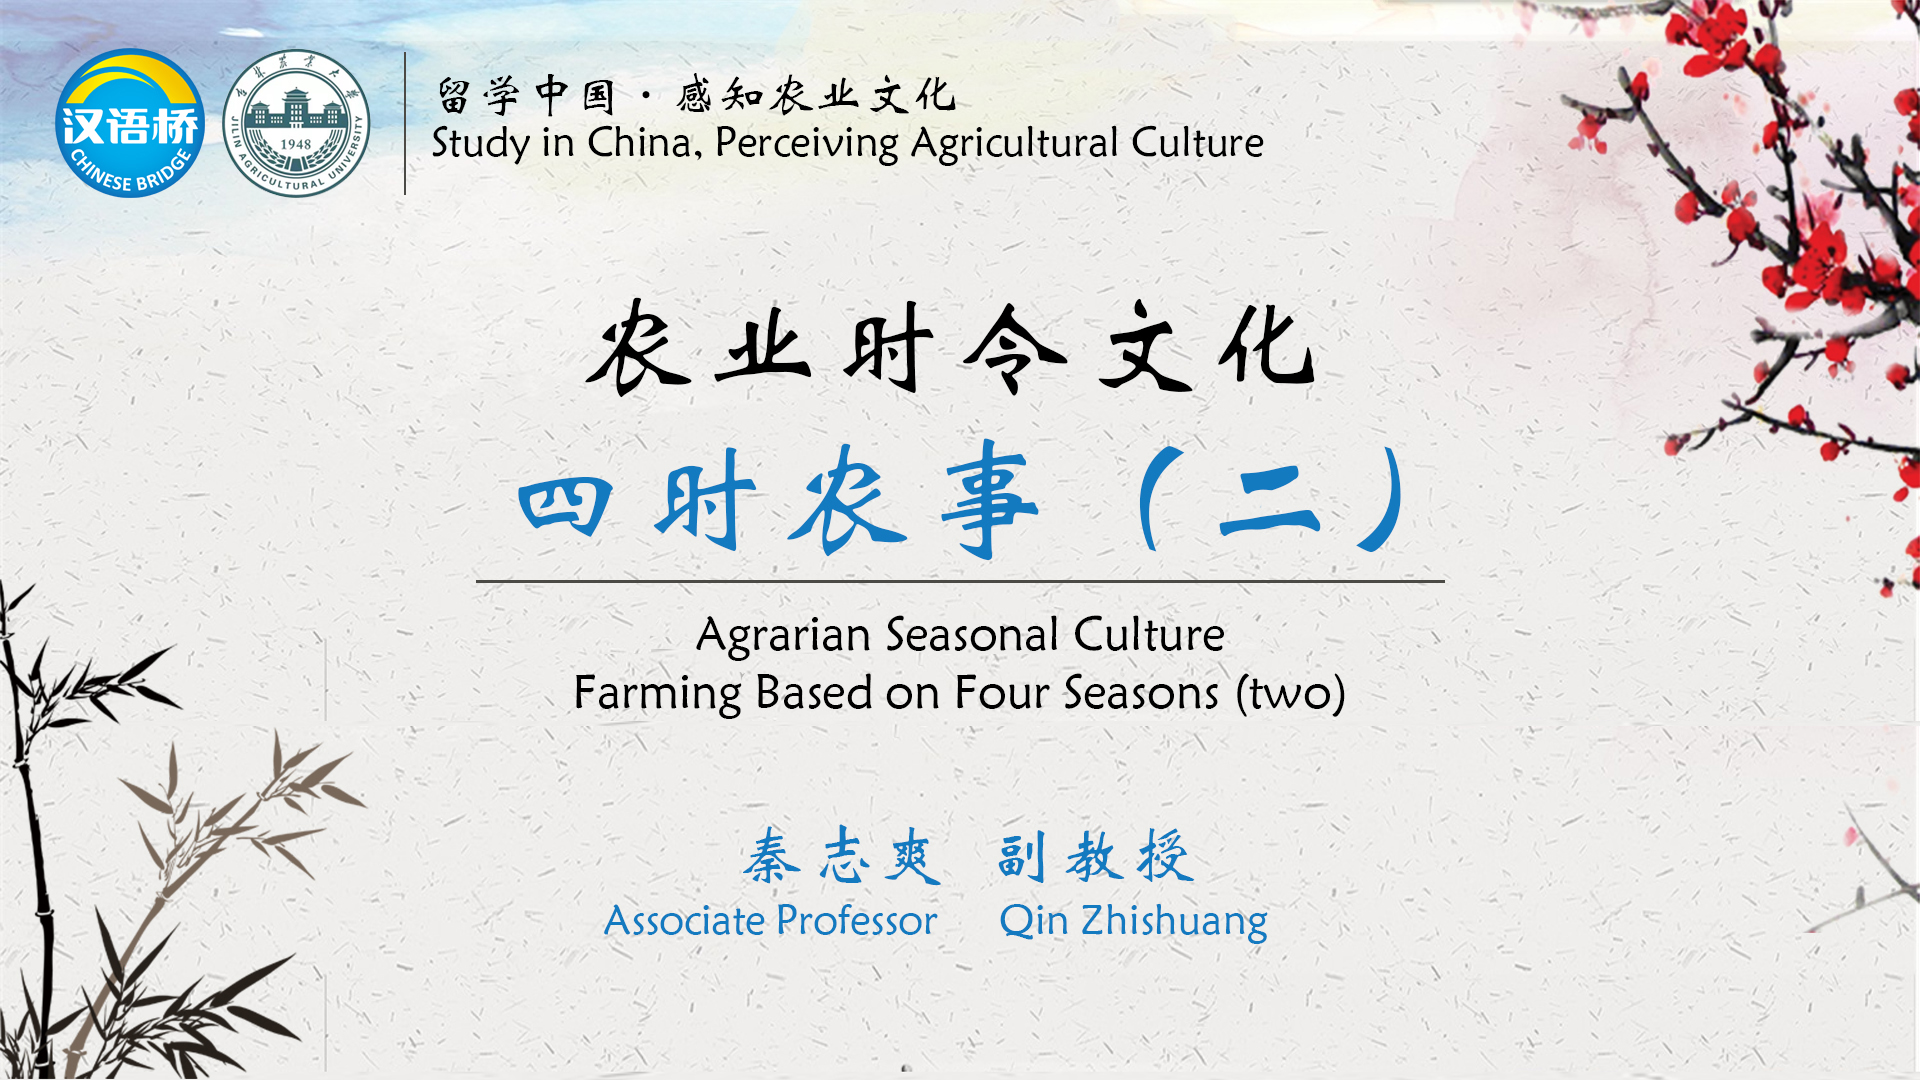 Agrarian Seasonal Culture: Agricultural Folk Culture